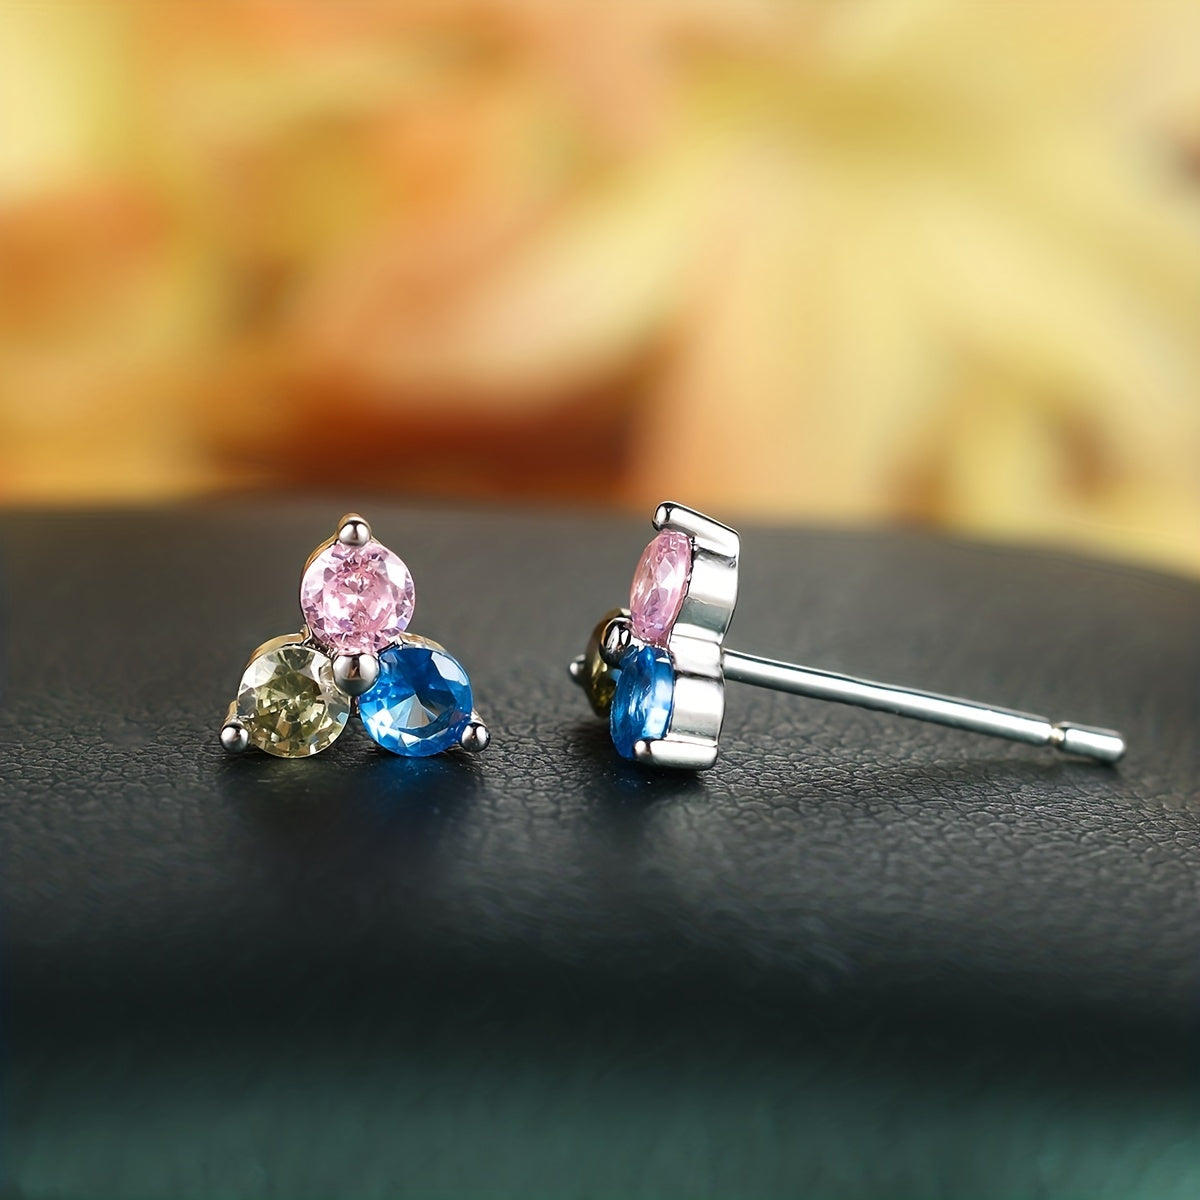 3 Colorful Shiny Zircon Decor Stud Earrings Bohemian Cute Style Copper Jewelry Daily Wear Accessories Female Gift